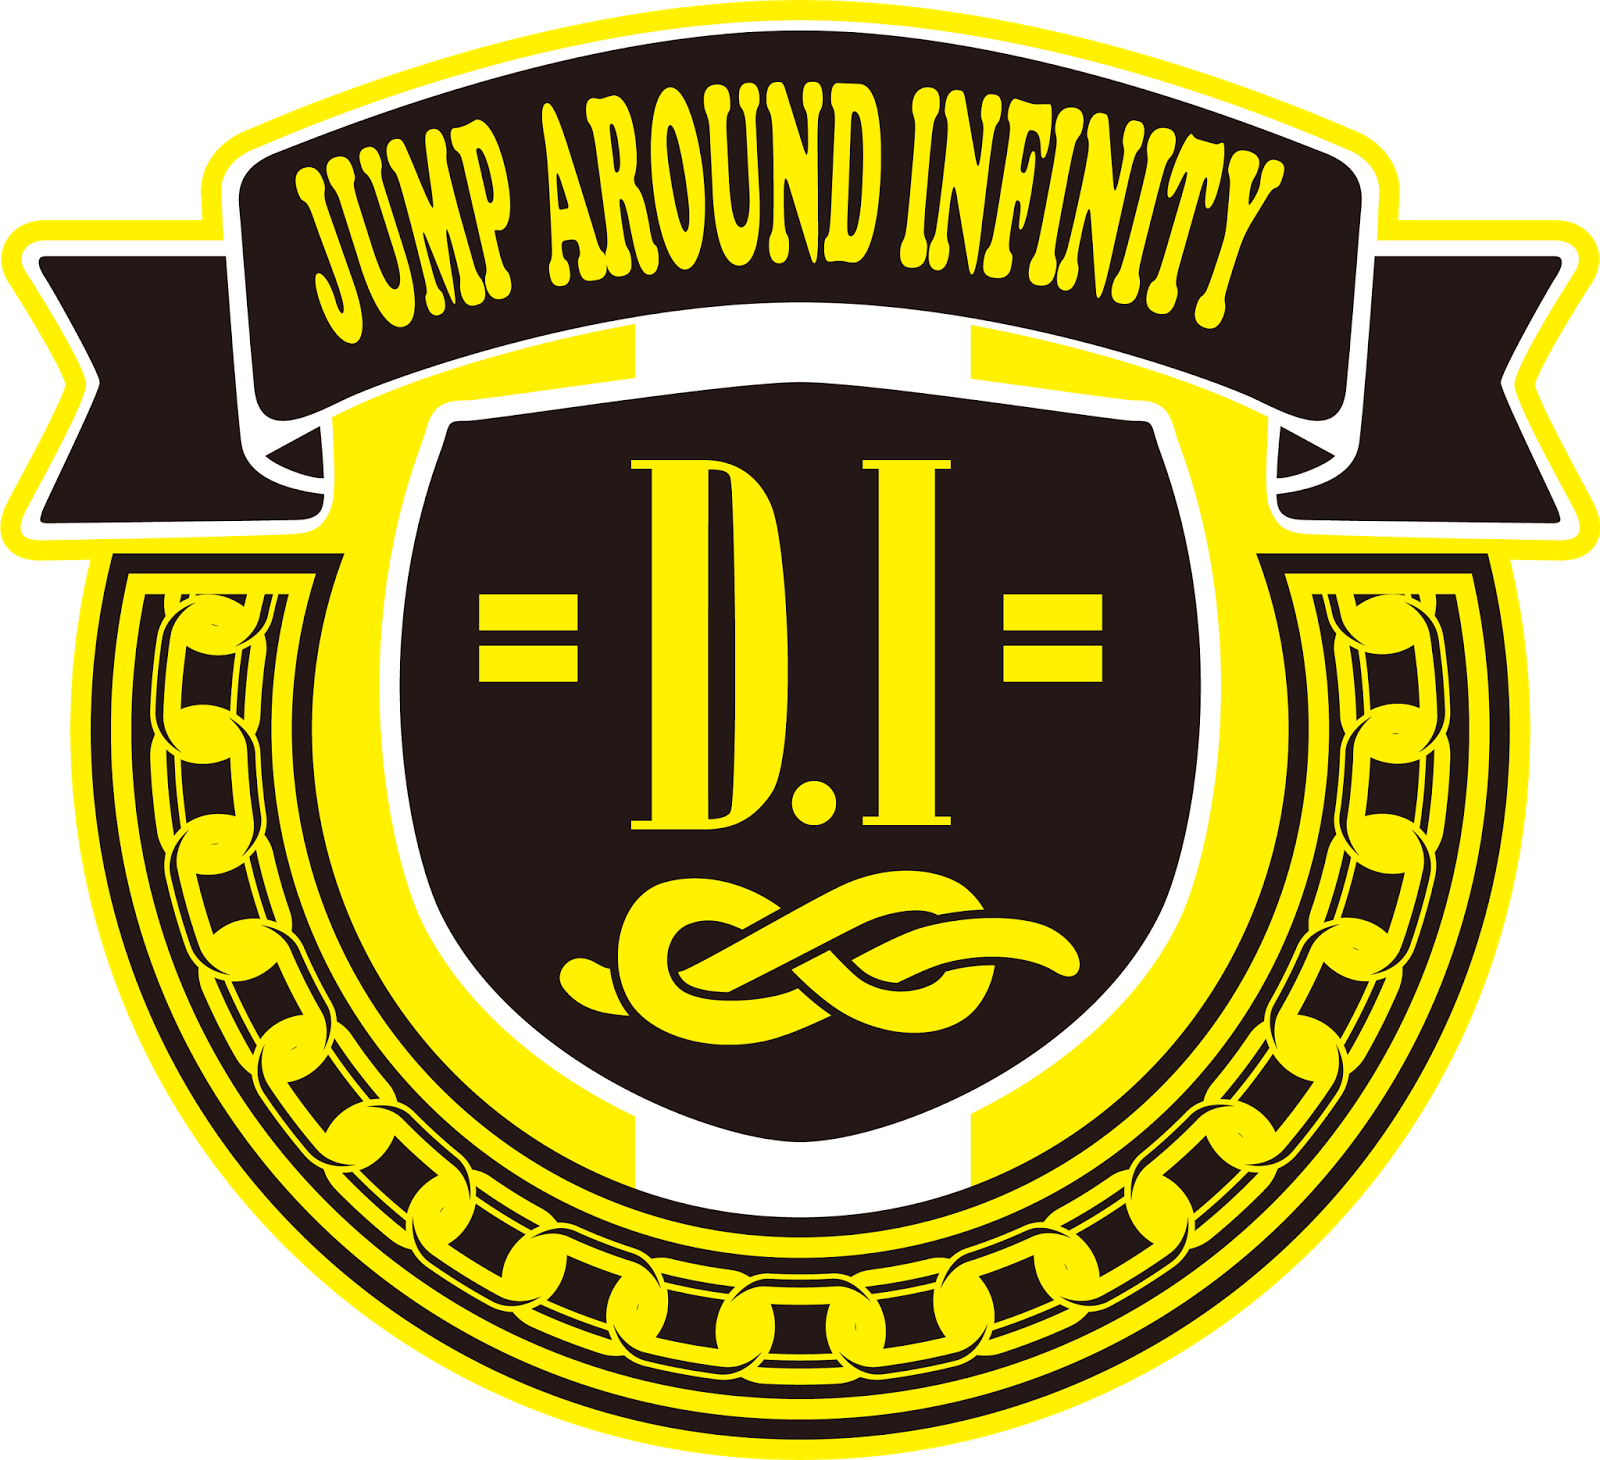 Doberman Infinity Jump Around のエンブレムを透過ロゴにしました